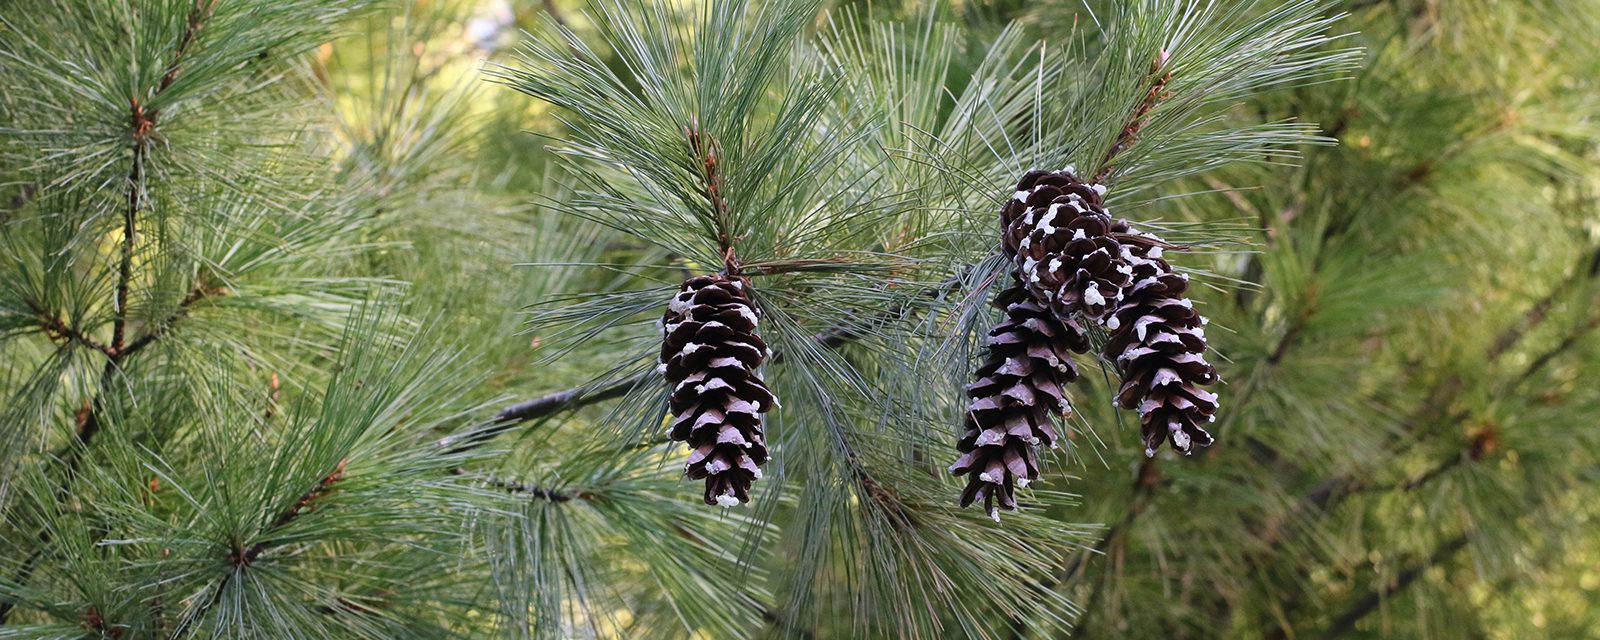 White pine in exhibit